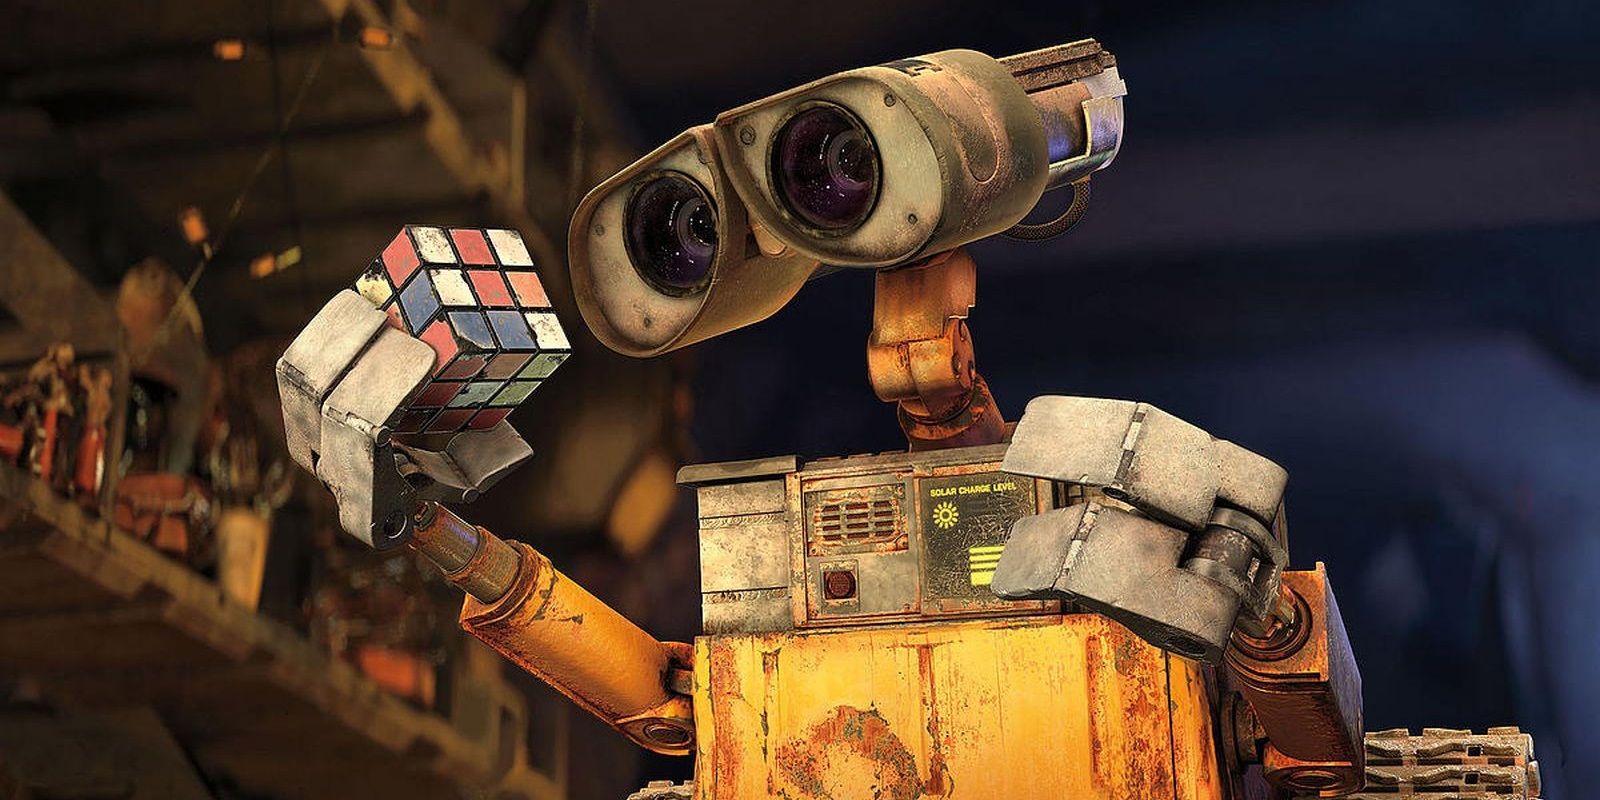 WALL-E looking at a Rubik's Cube